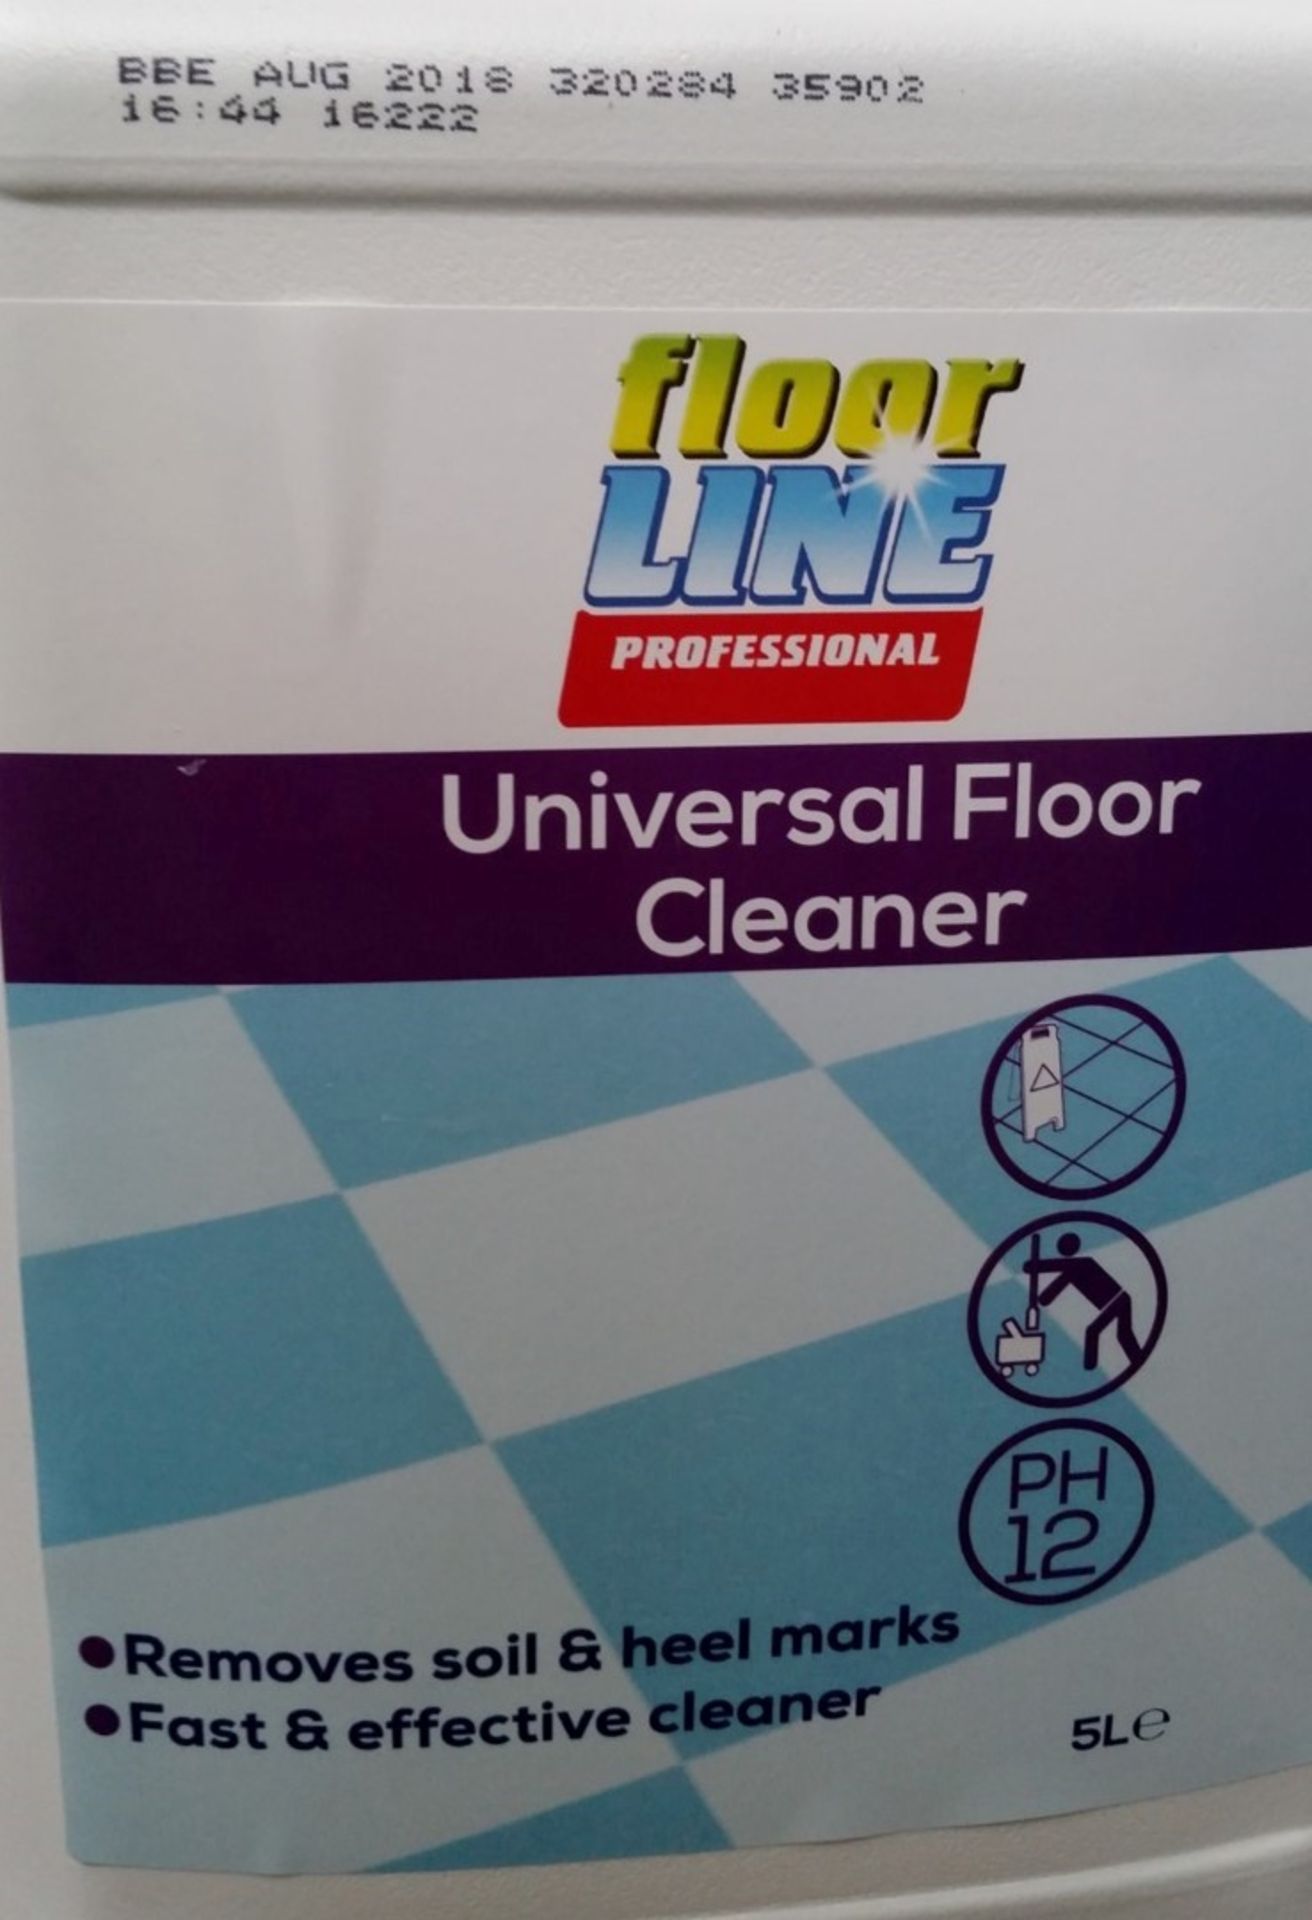 2 x Floor Line Professional 5 Litre Universal Floor Cleaner - Removes Soil & Heel Marks - Fast & - Image 6 of 7